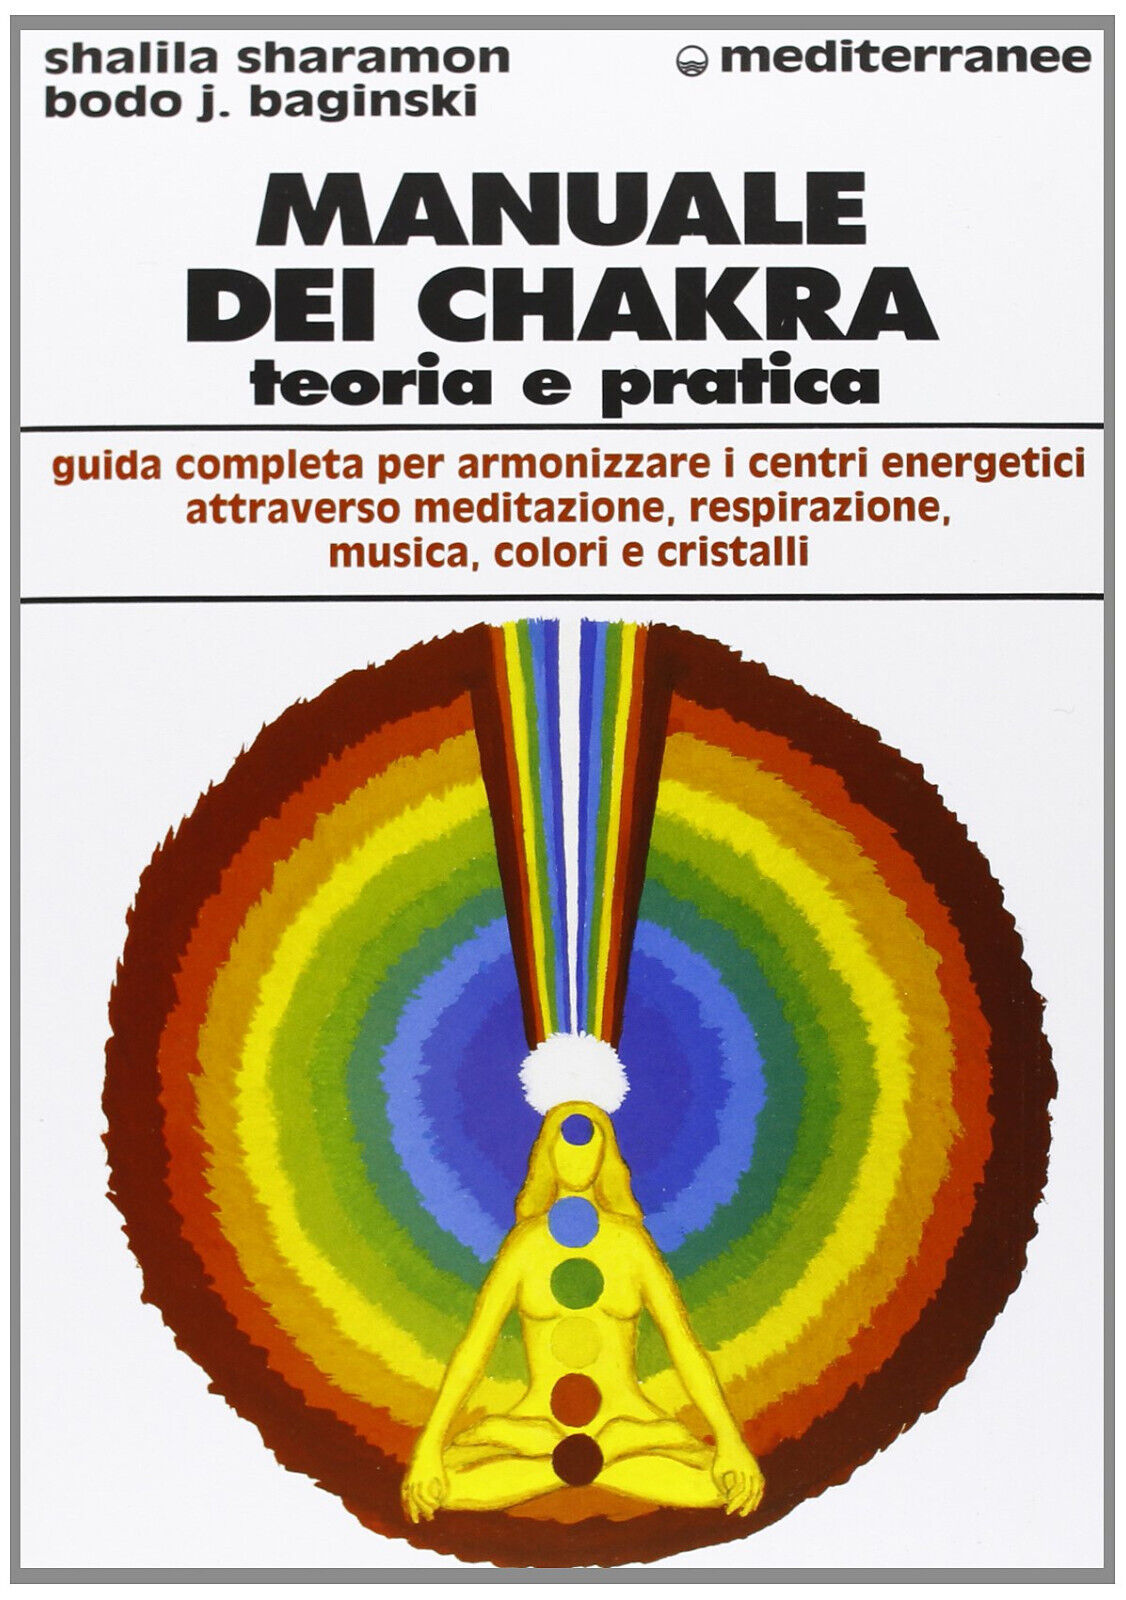 Manuale dei chakra - Bodo J. Baginski, Shalila Sharamon - Edizioni Mediterranee libro usato